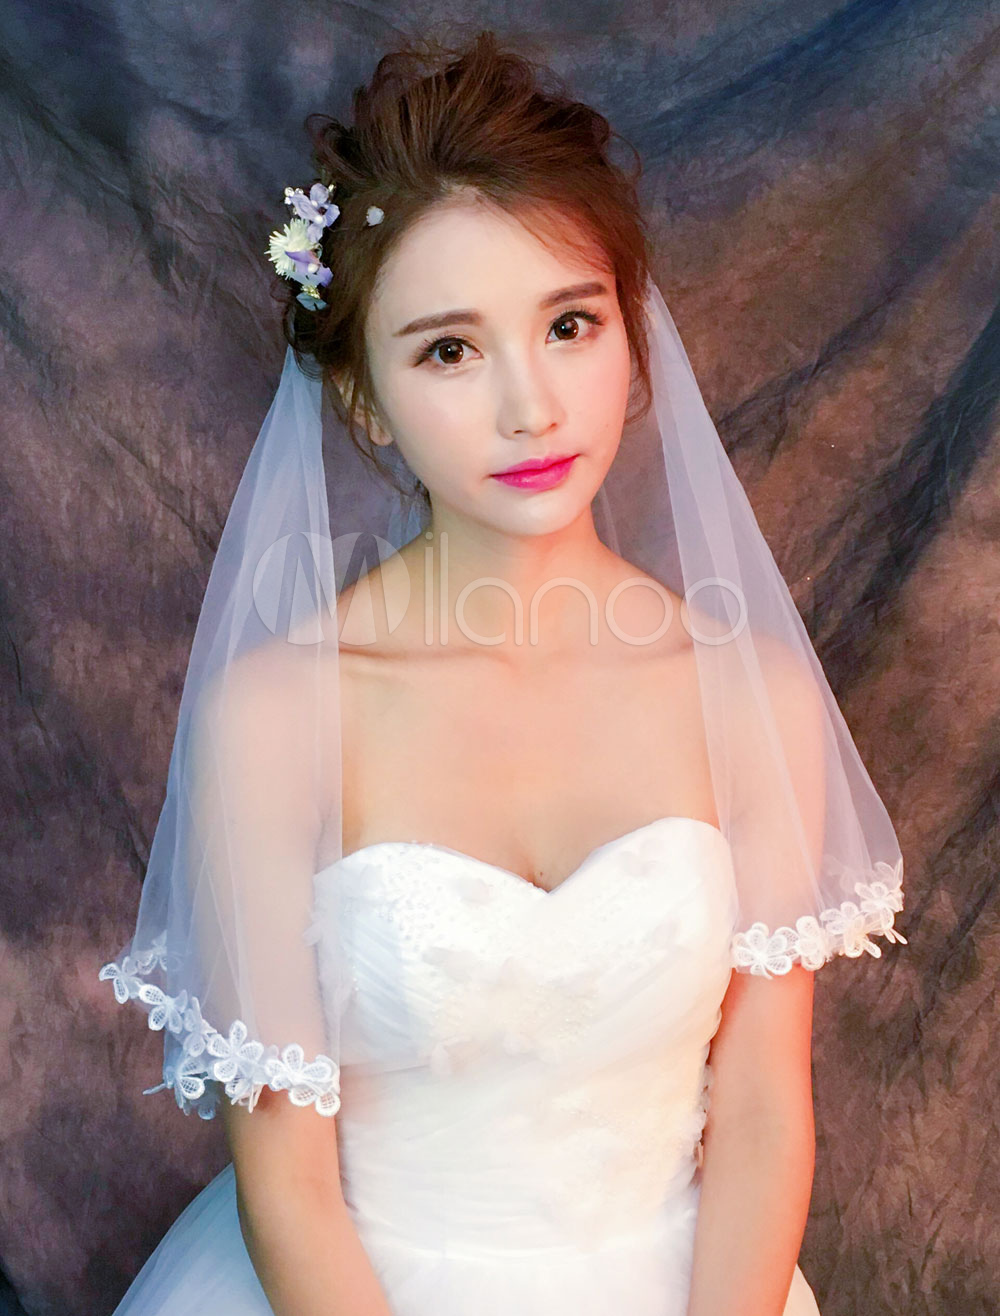 Wedding Bridal Veil Lace Flowers Applique Edge 2 Tier Ivory Elbow Length Veil 0165